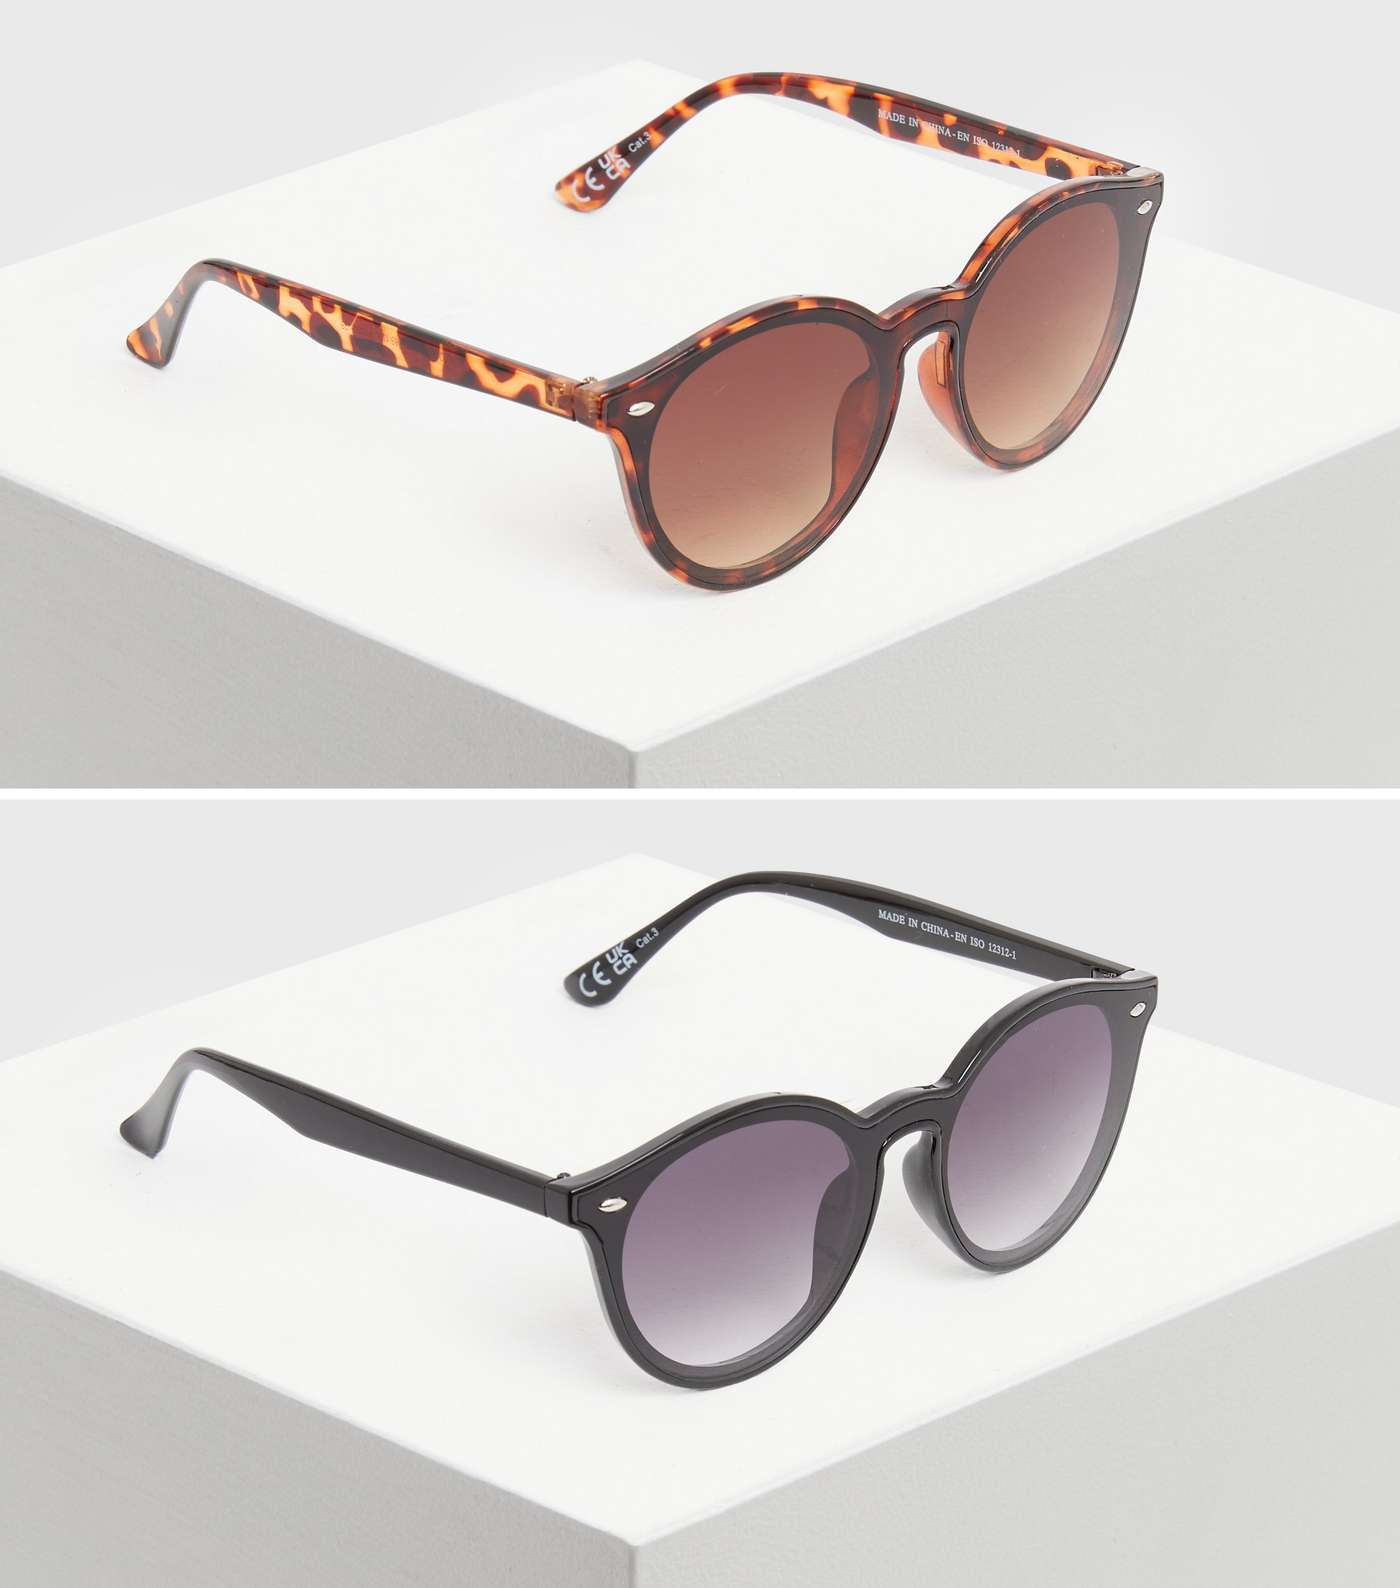 Girls 2 Pack Black and Brown Tortoiseshell Effect Frame Sunglasses Image 2